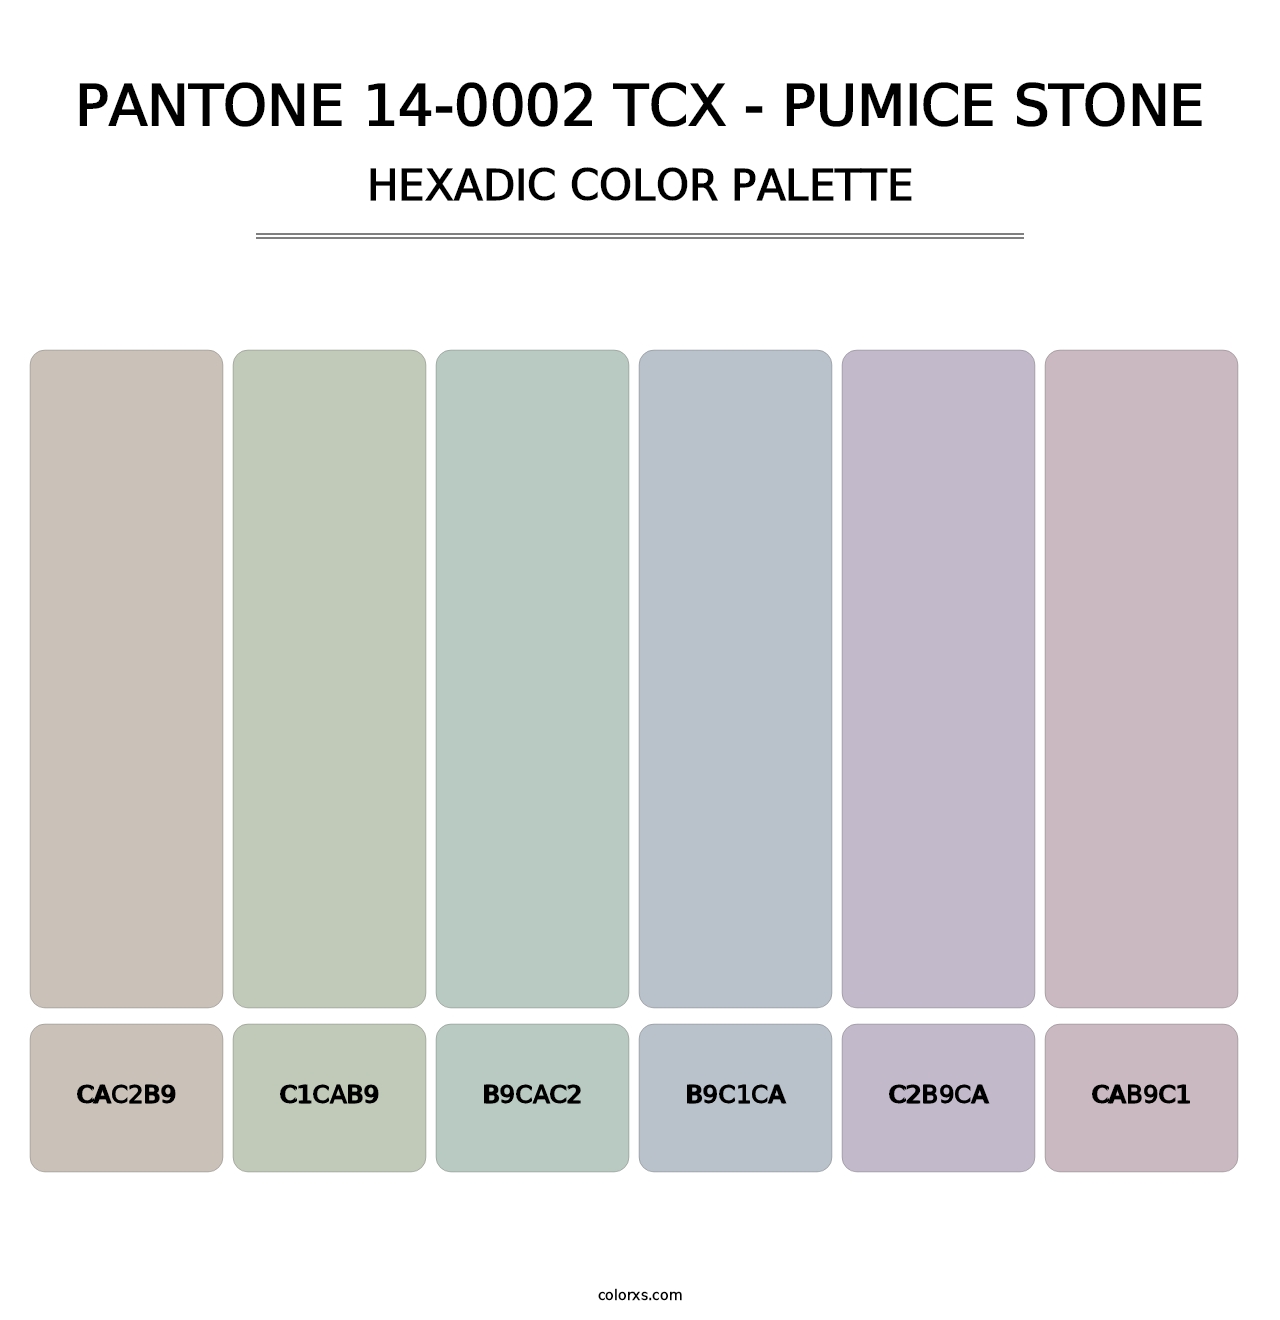 PANTONE 14-0002 TCX - Pumice Stone - Hexadic Color Palette